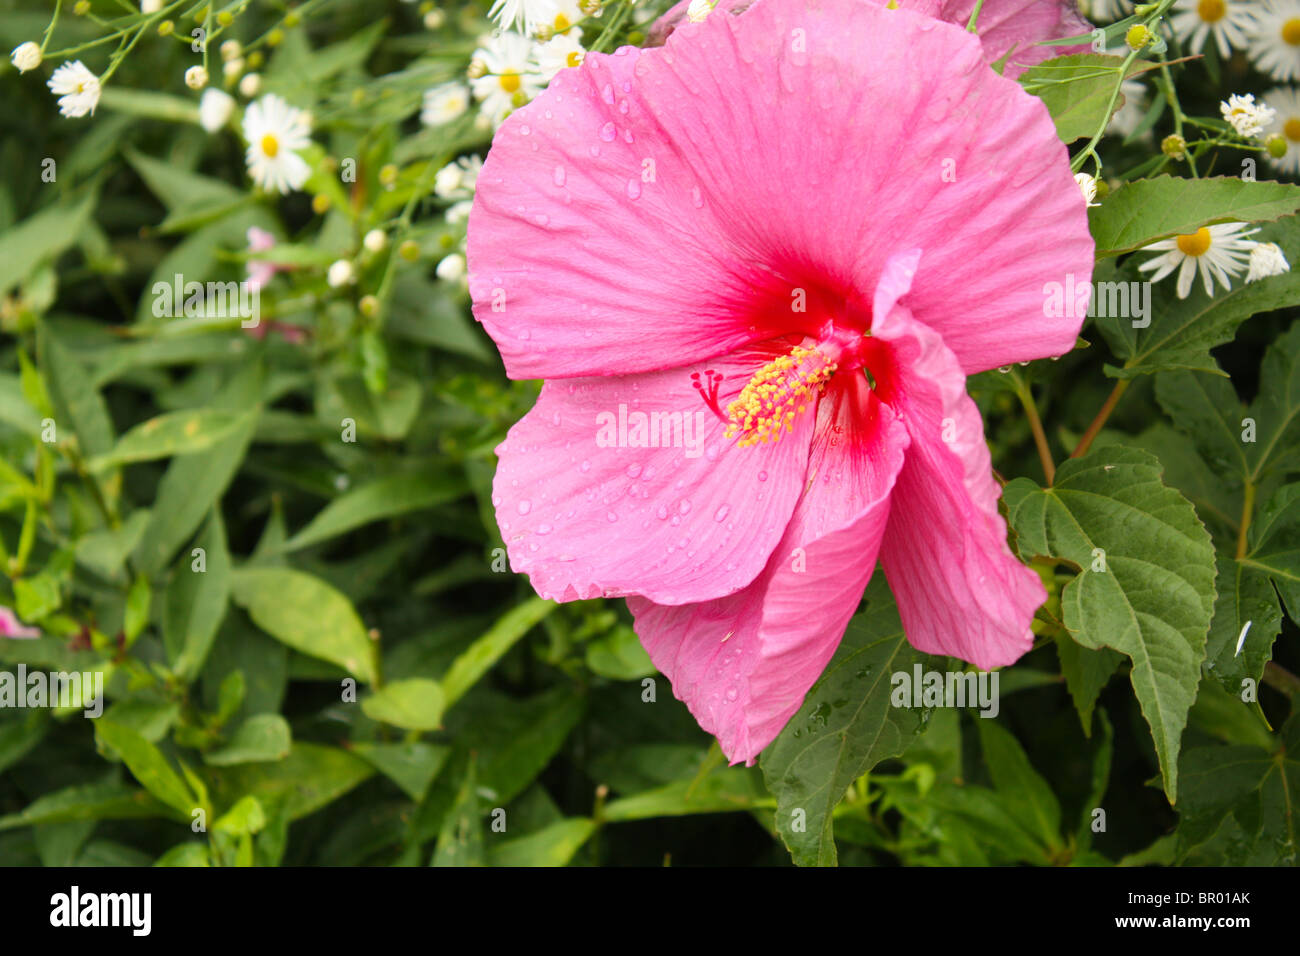 pink flower garden summer outdoor Stock Photo